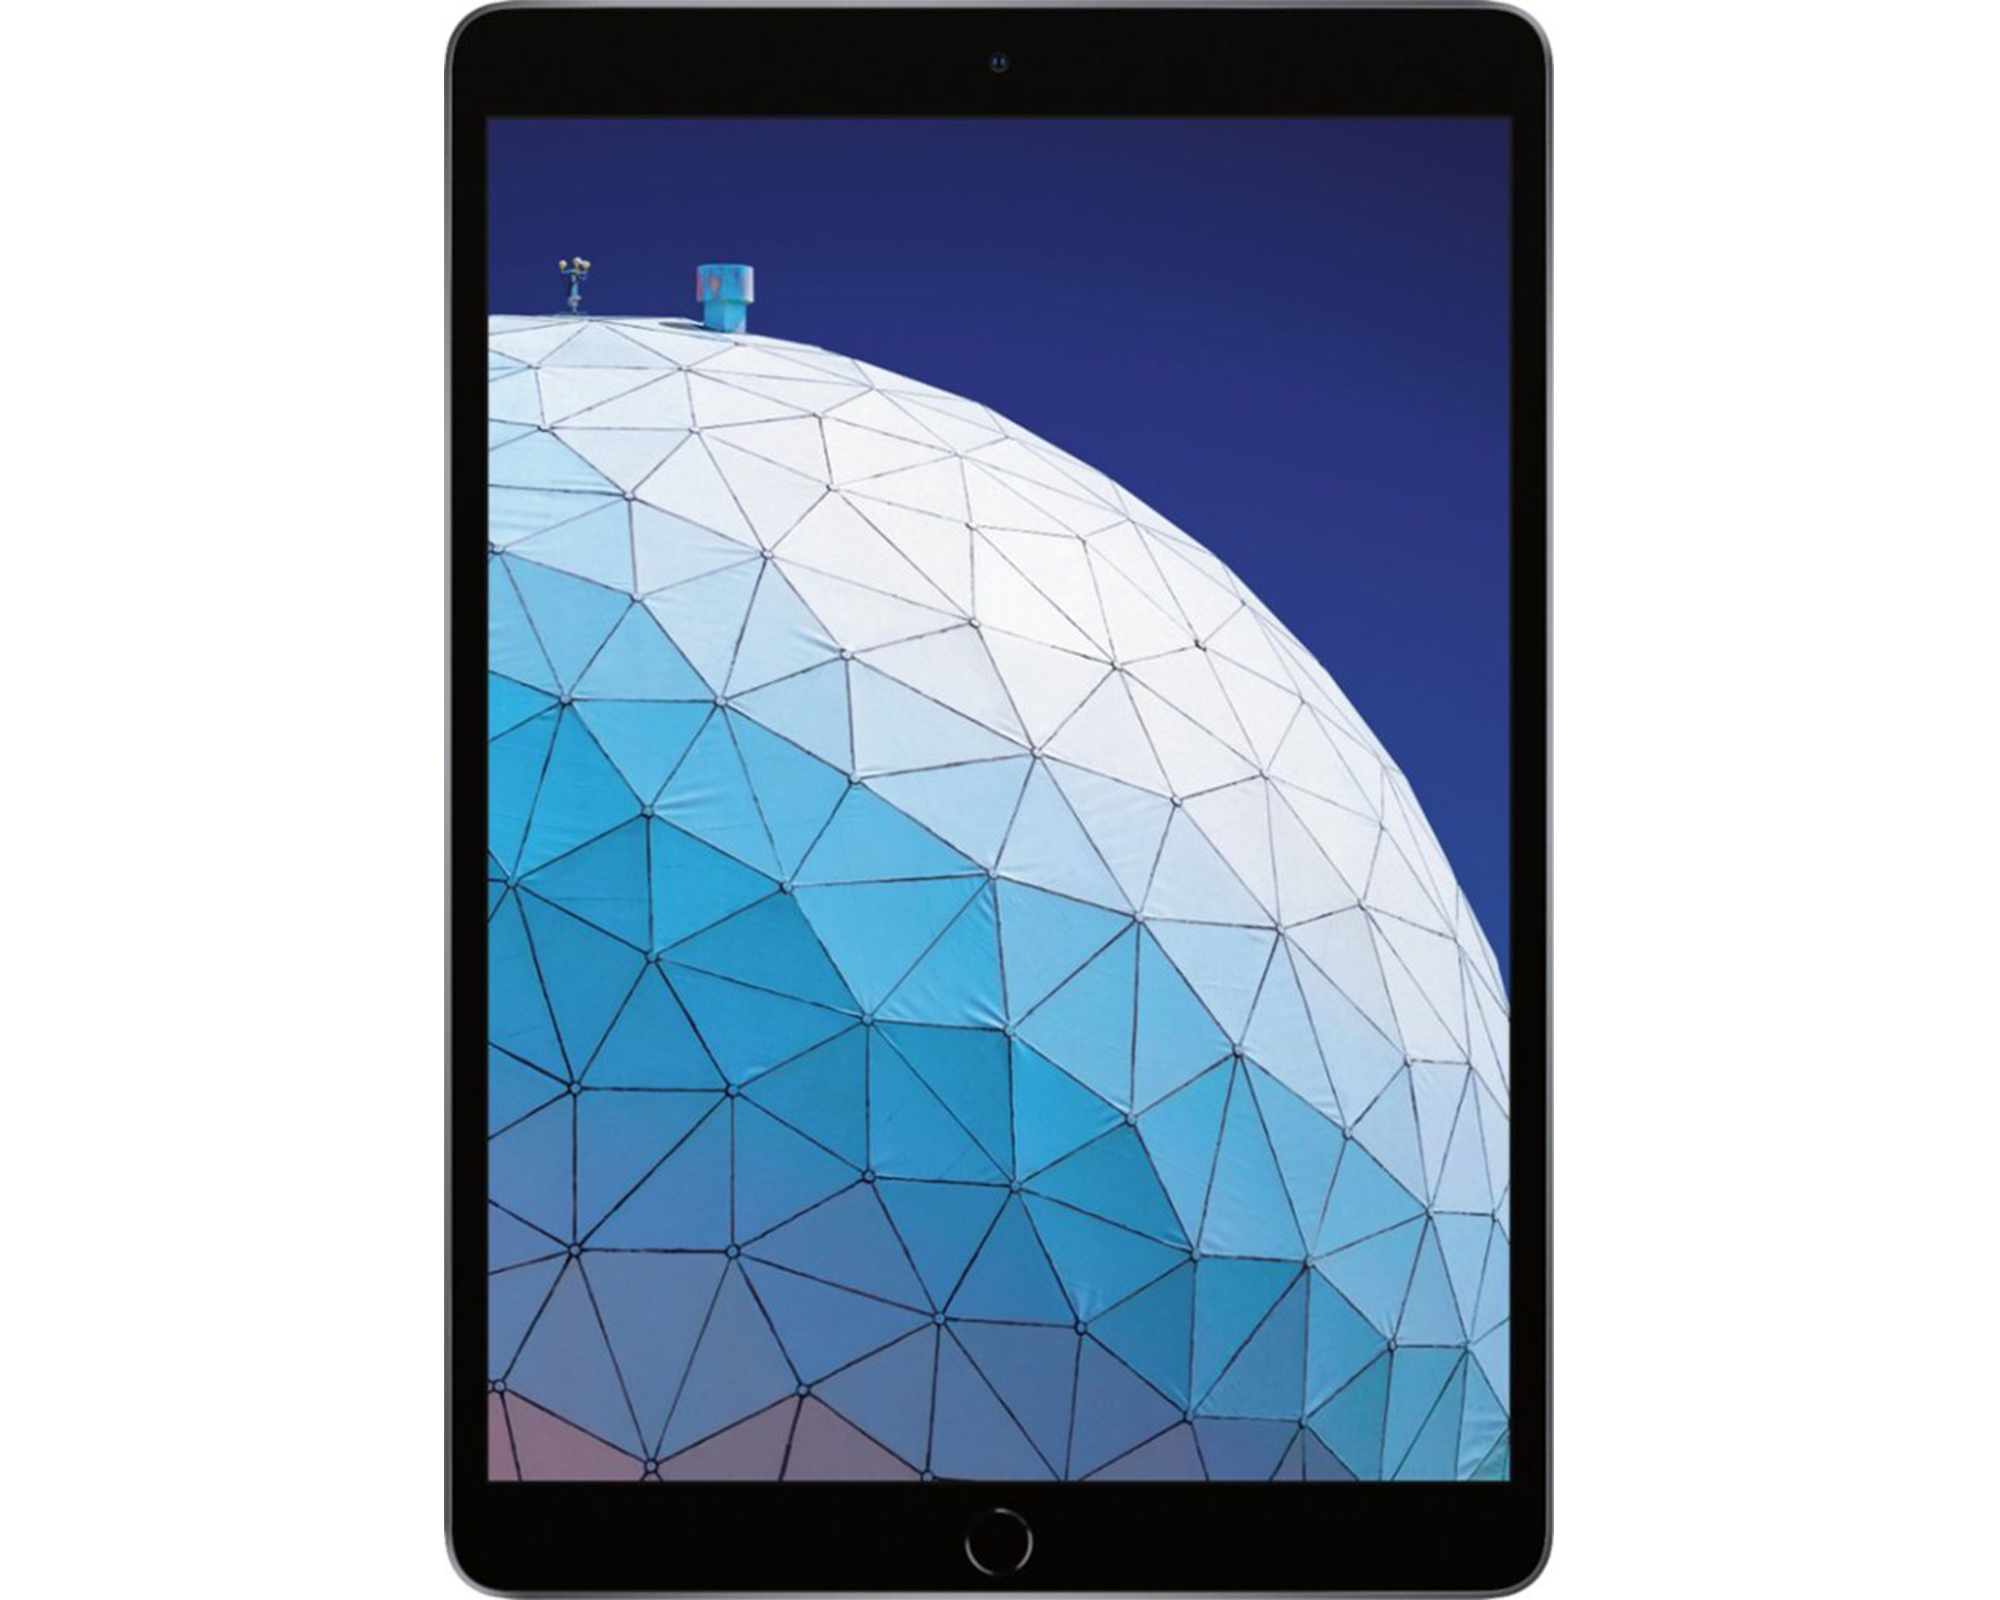 Restored Apple iPad Air 2 A1566 Wi-Fi (MGL12LL/A ) Space Gray - 16GB, 9.7 (Refurbished) - image 1 of 5